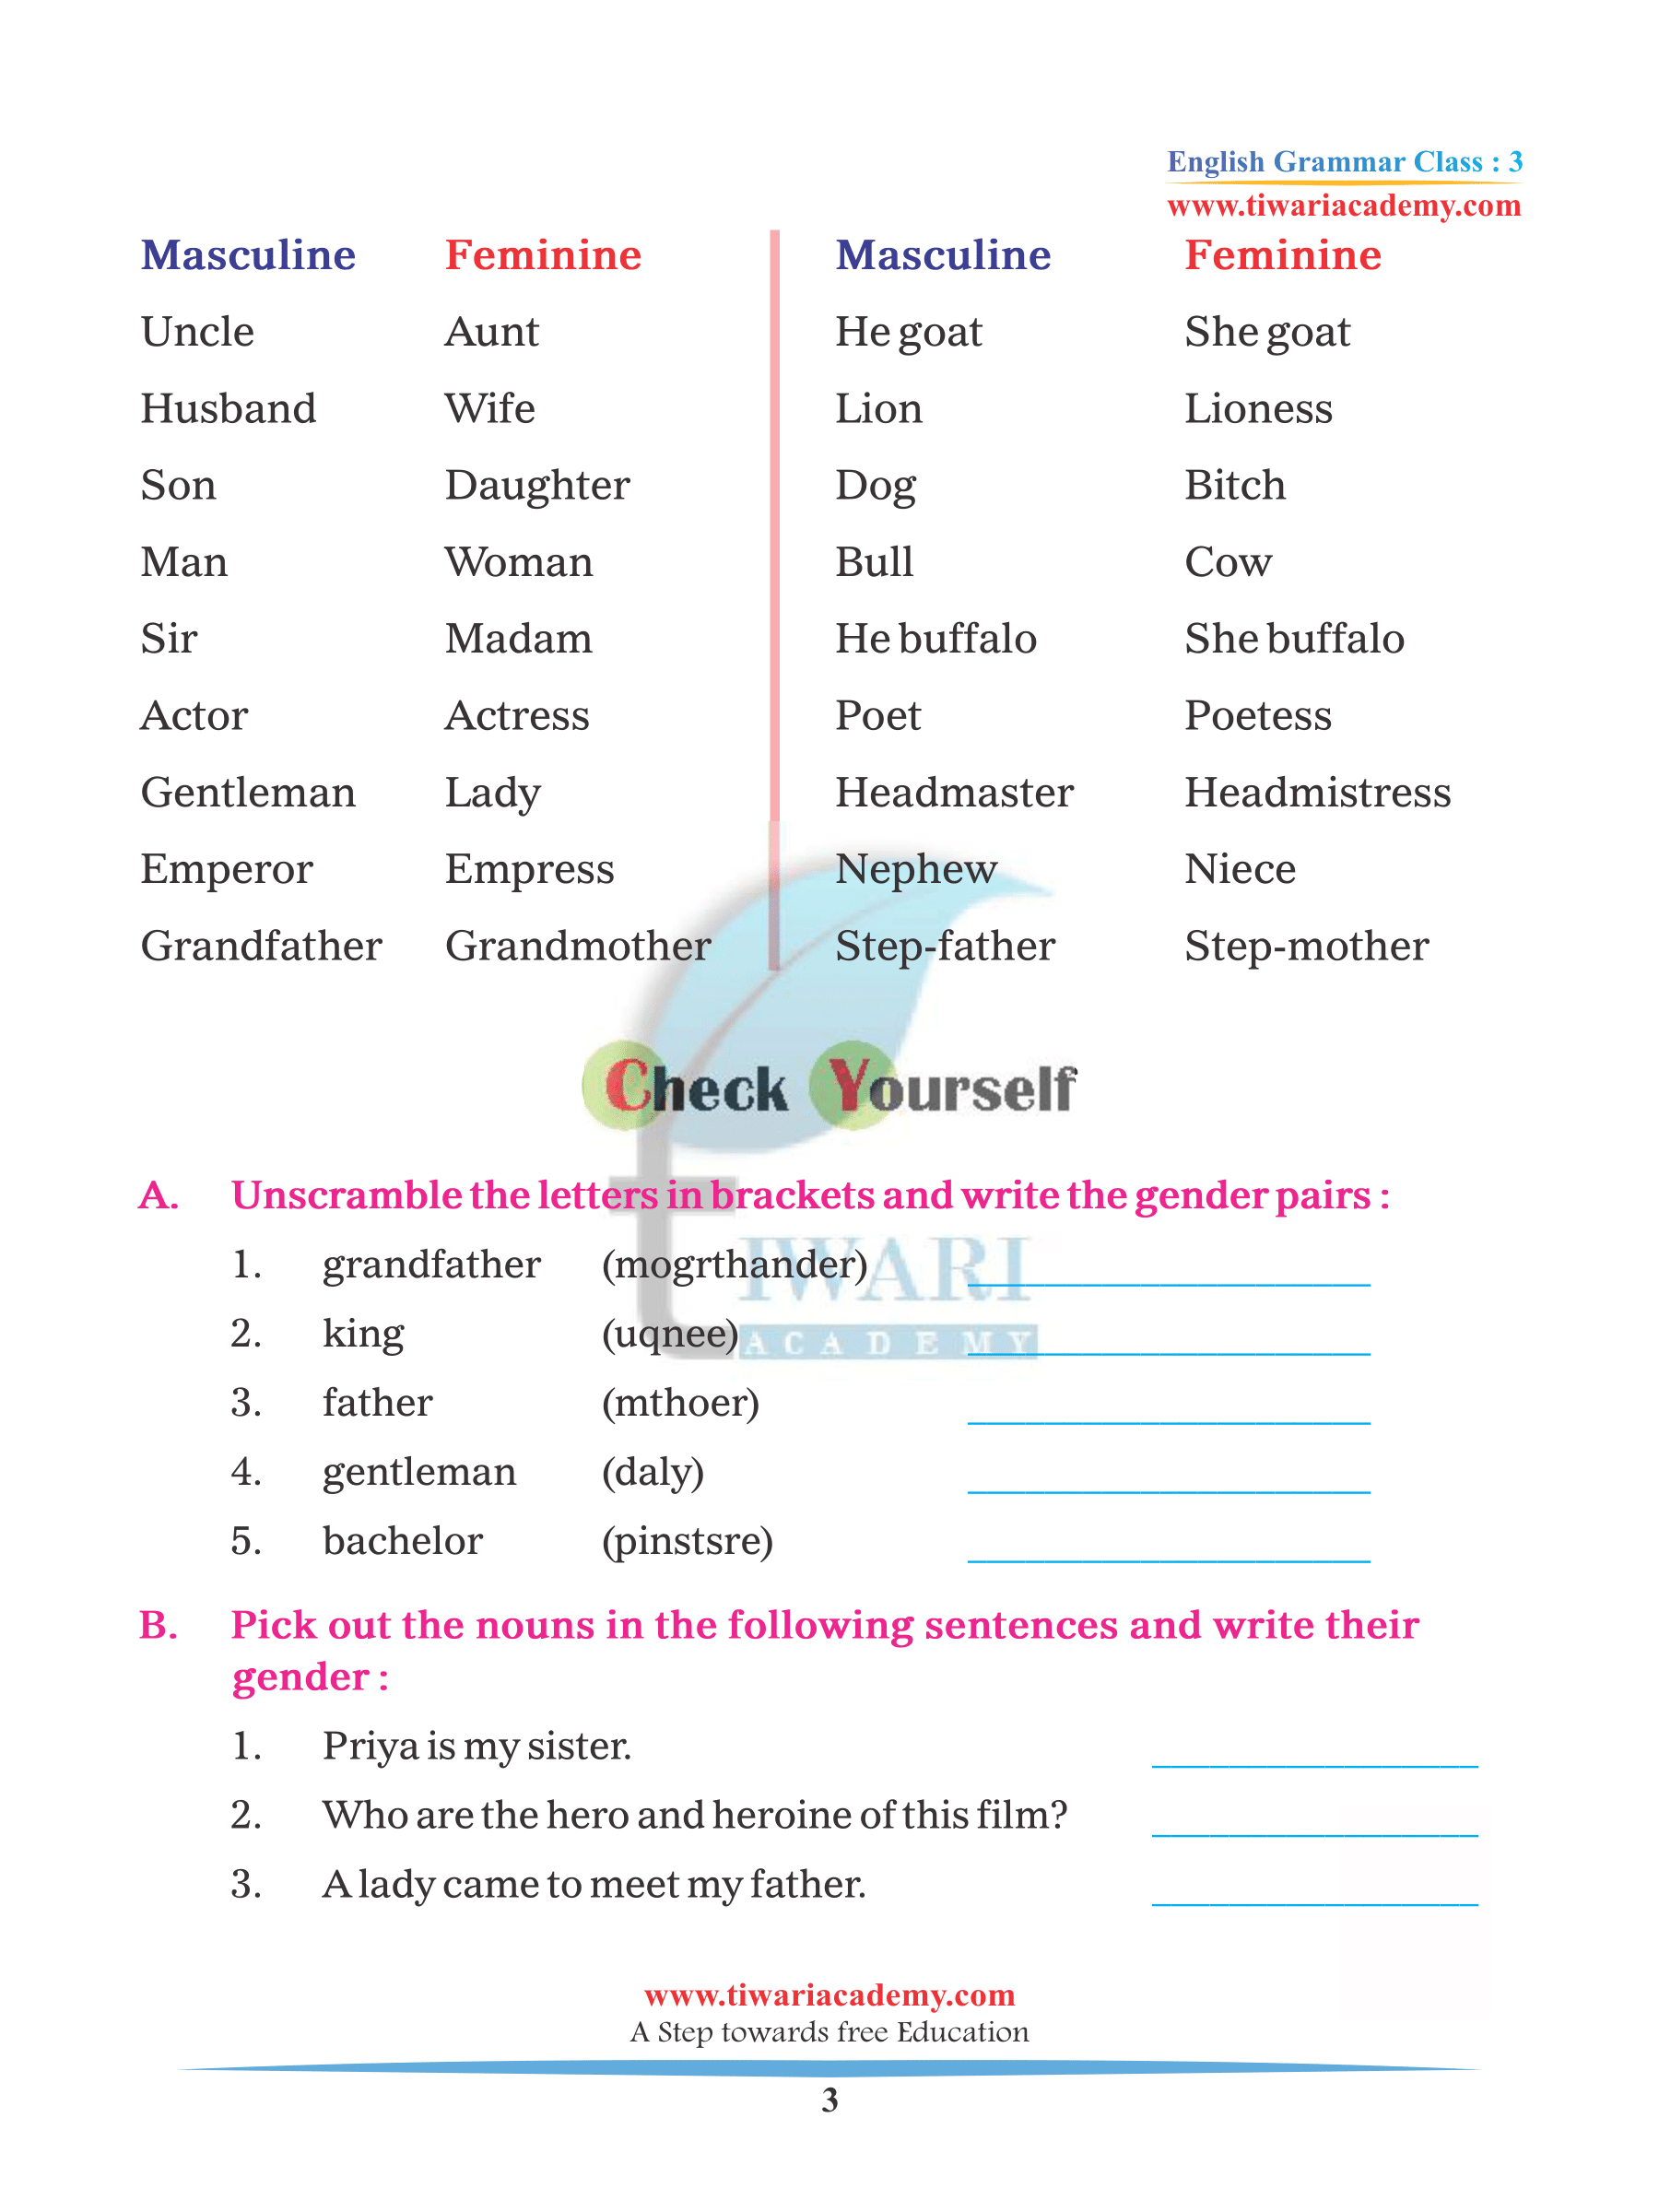 gender-nouns-worksheet-gender-nouns-activity-sanchez-kellys